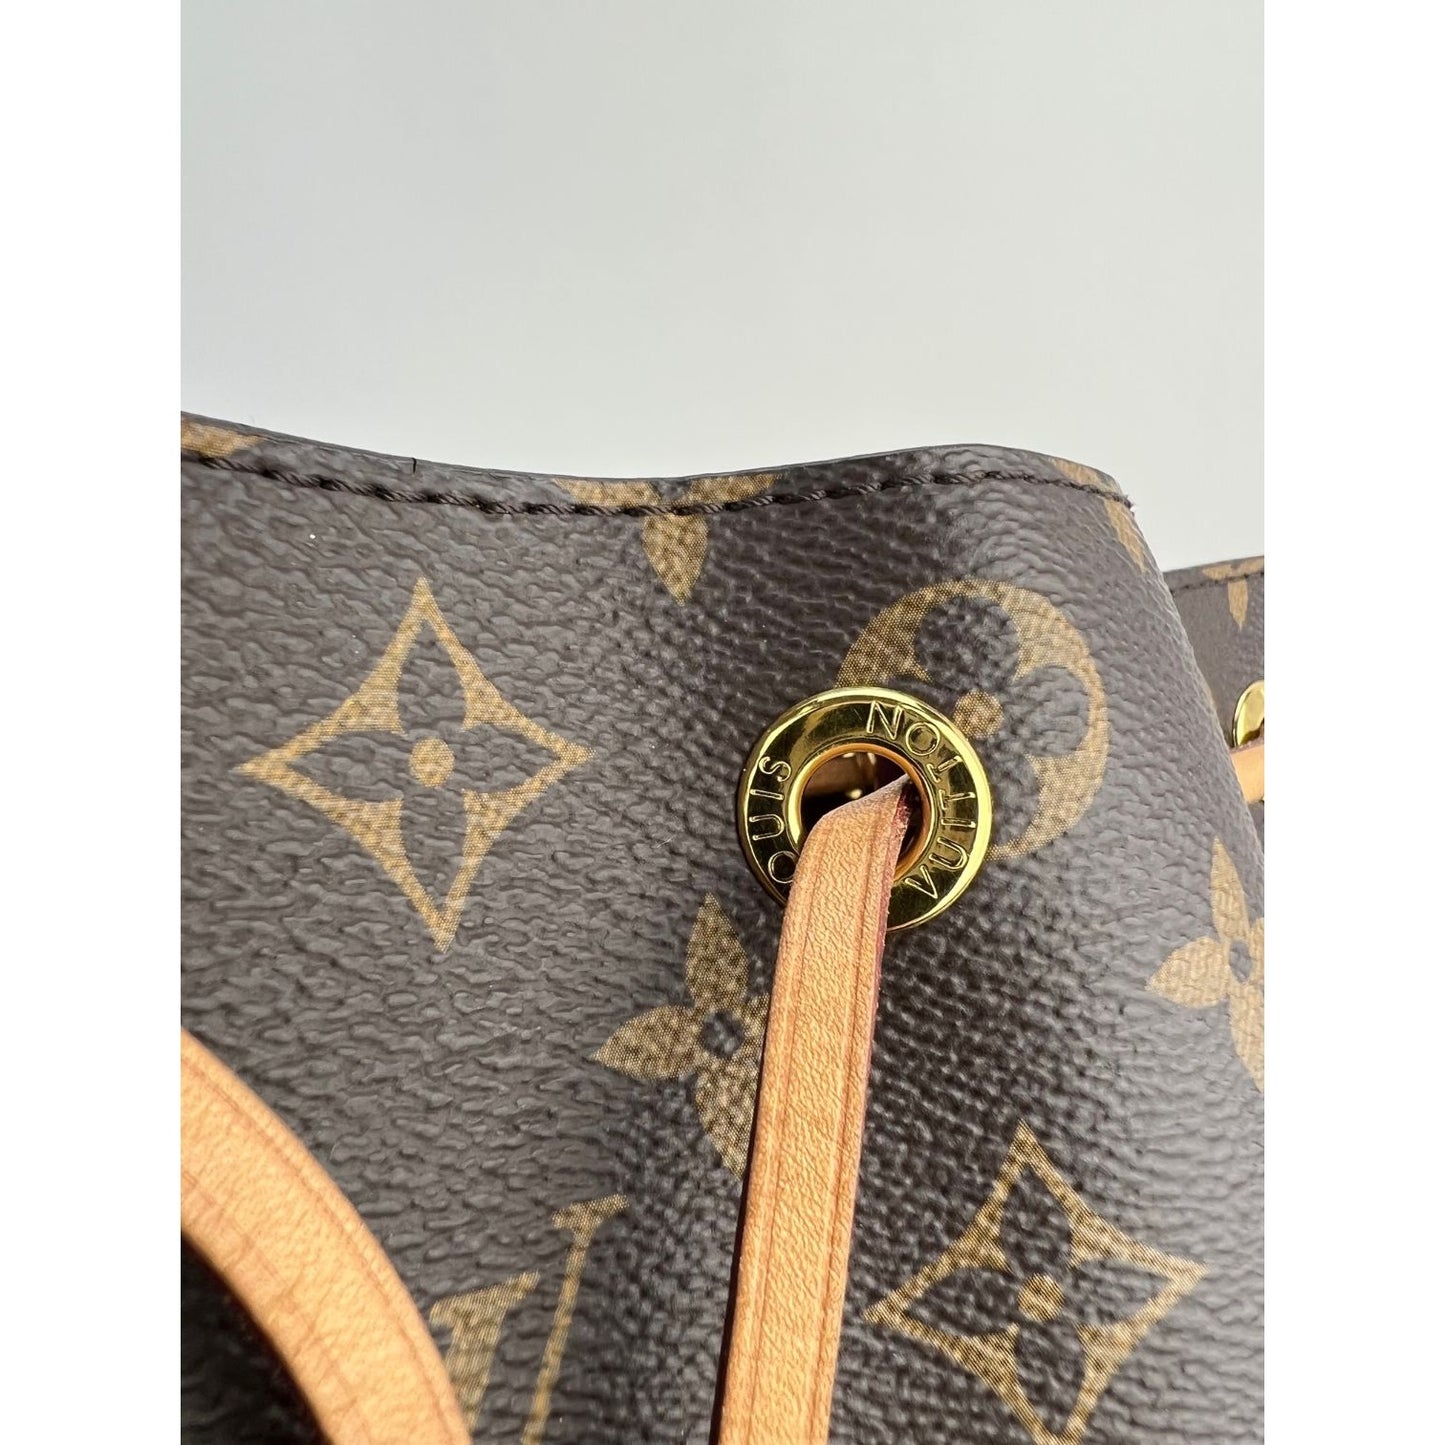 Louis Vuitton Monogram Montsouris Nm Backpack 556858